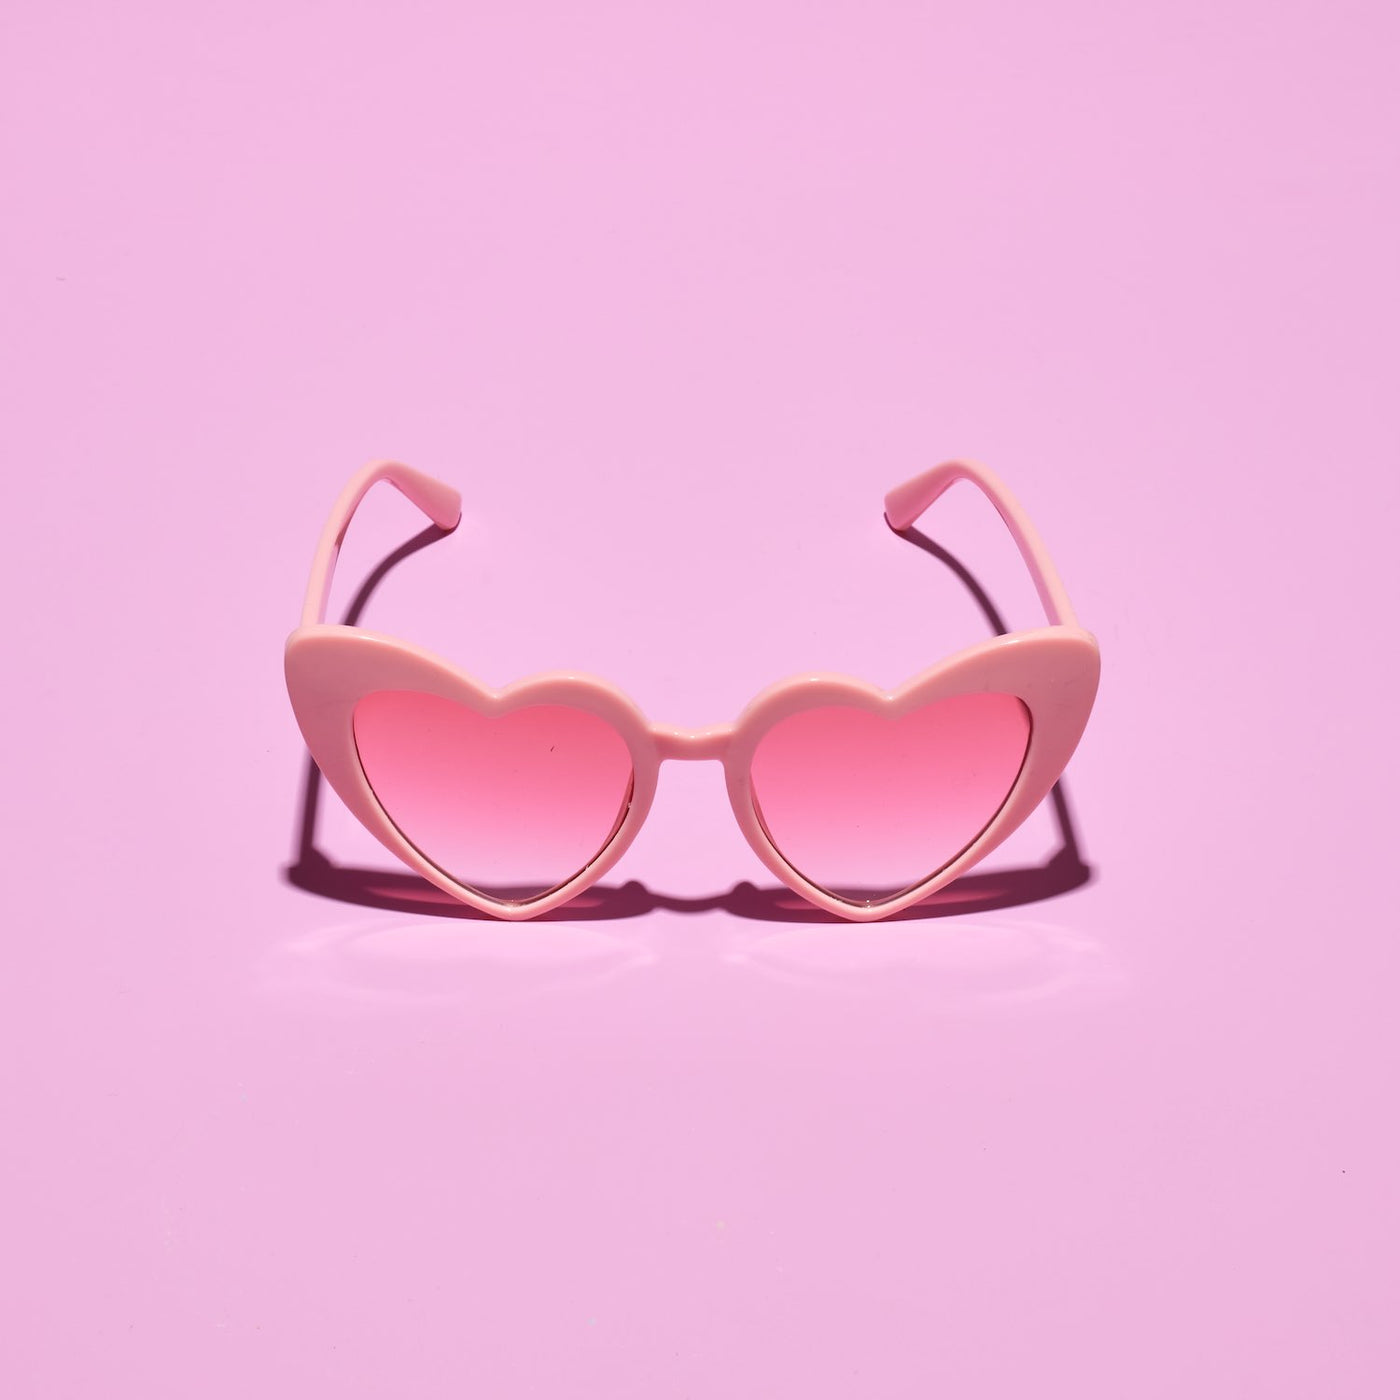 "Love Me" Sunglasses